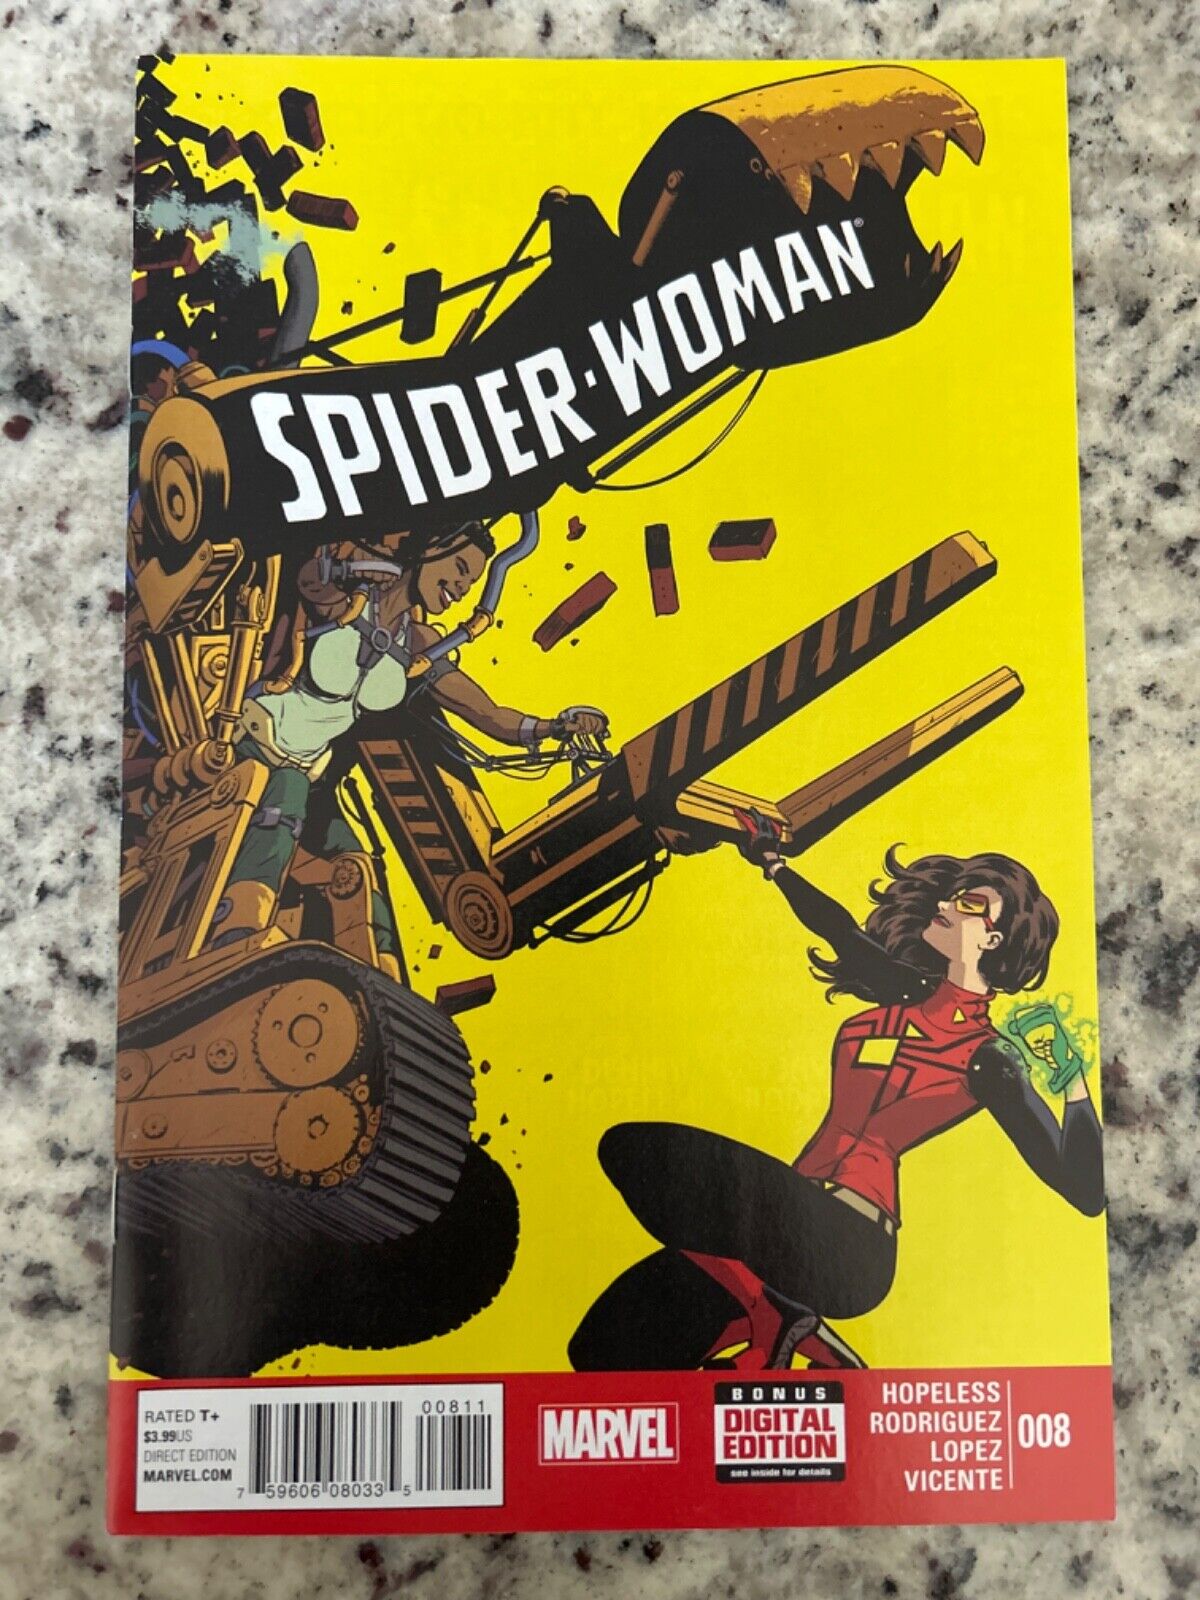 Spider-Woman #8 Vol. 4 (Marvel, 2015) vf+